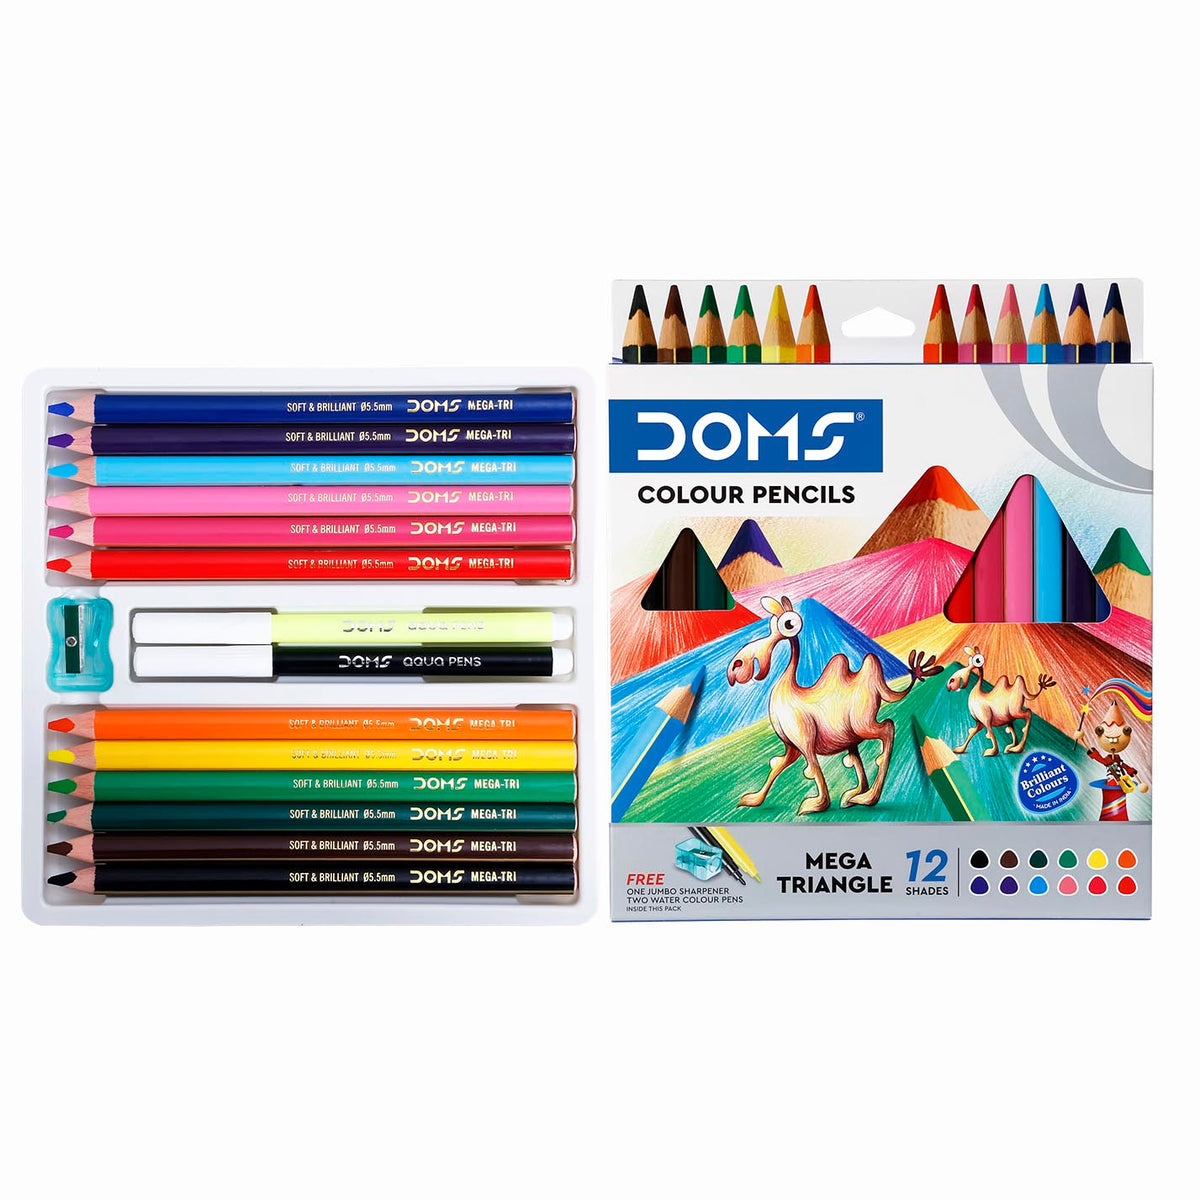 DOMS Mega Triangle Colour Pencils Display Box 12 Shades